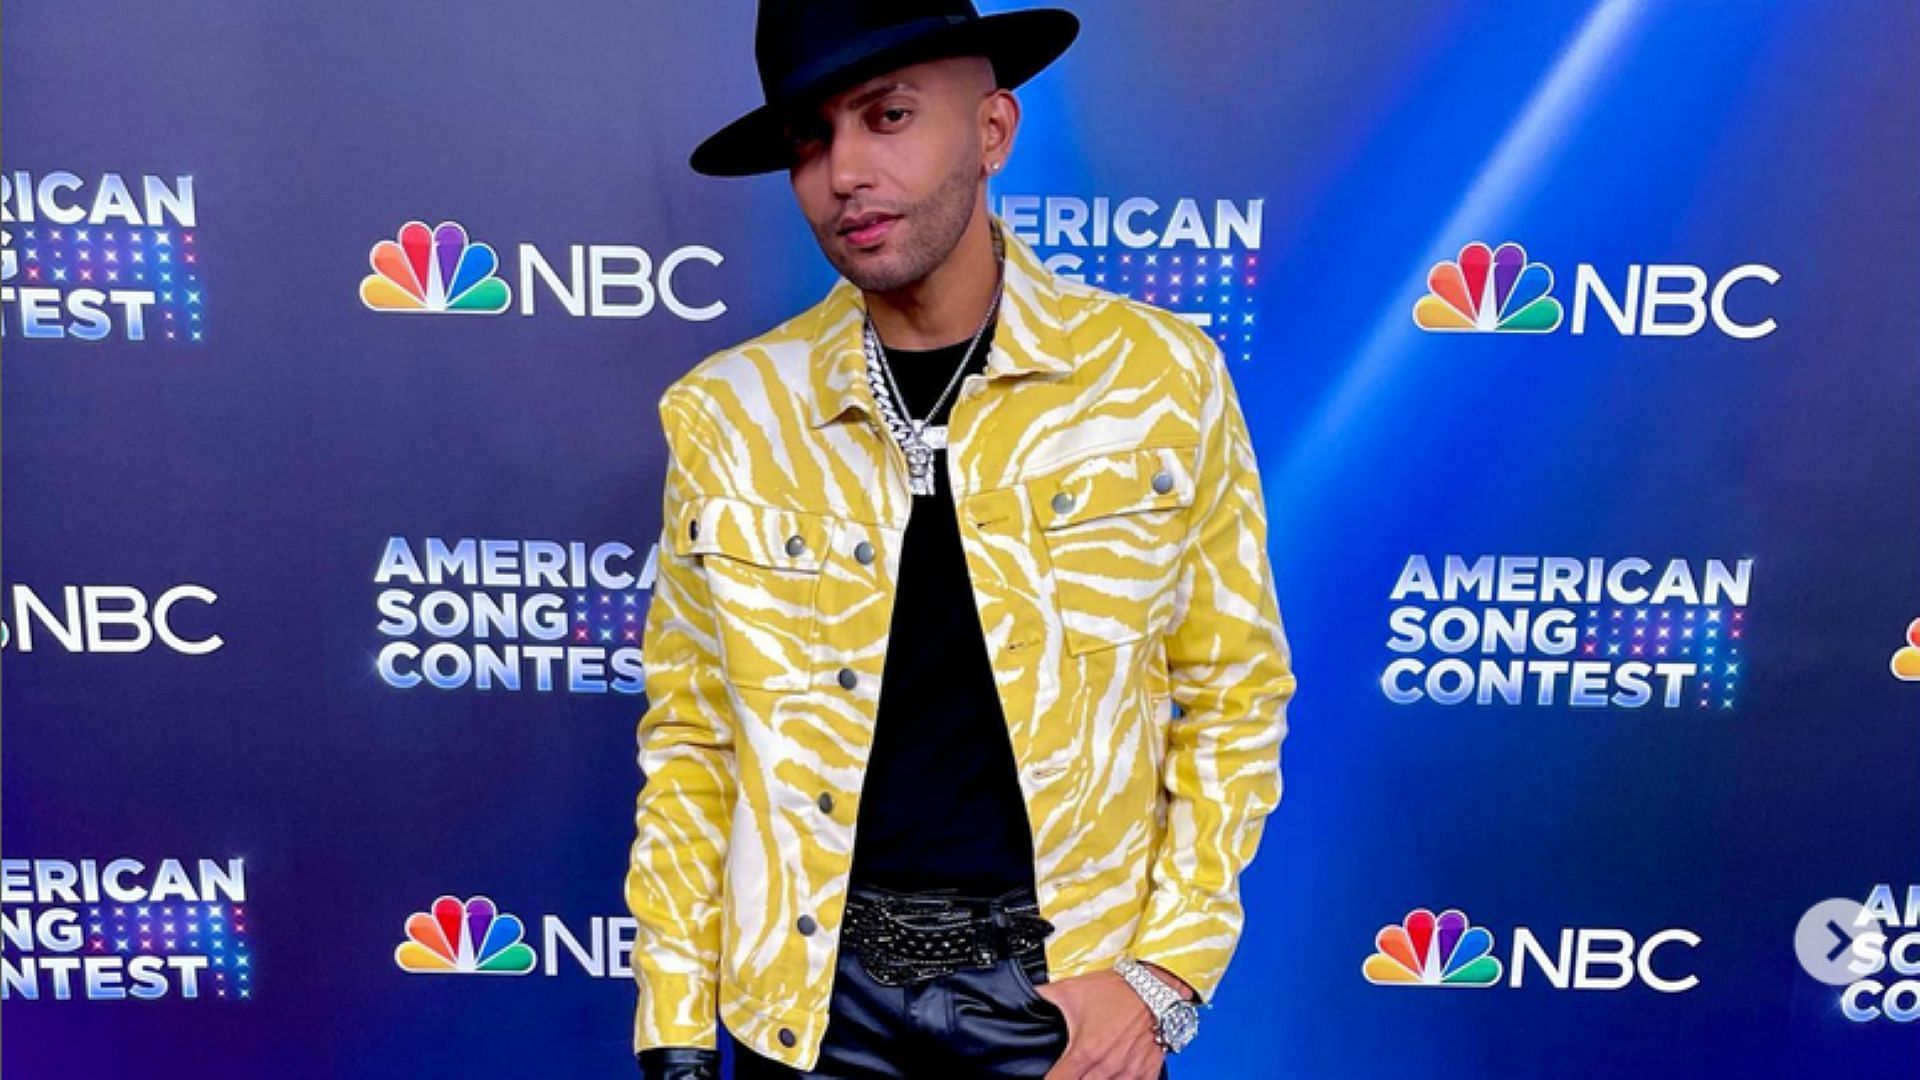 Singer Cruz Rock to perform in American Song Contest (Image via cruzrock/Instagram)